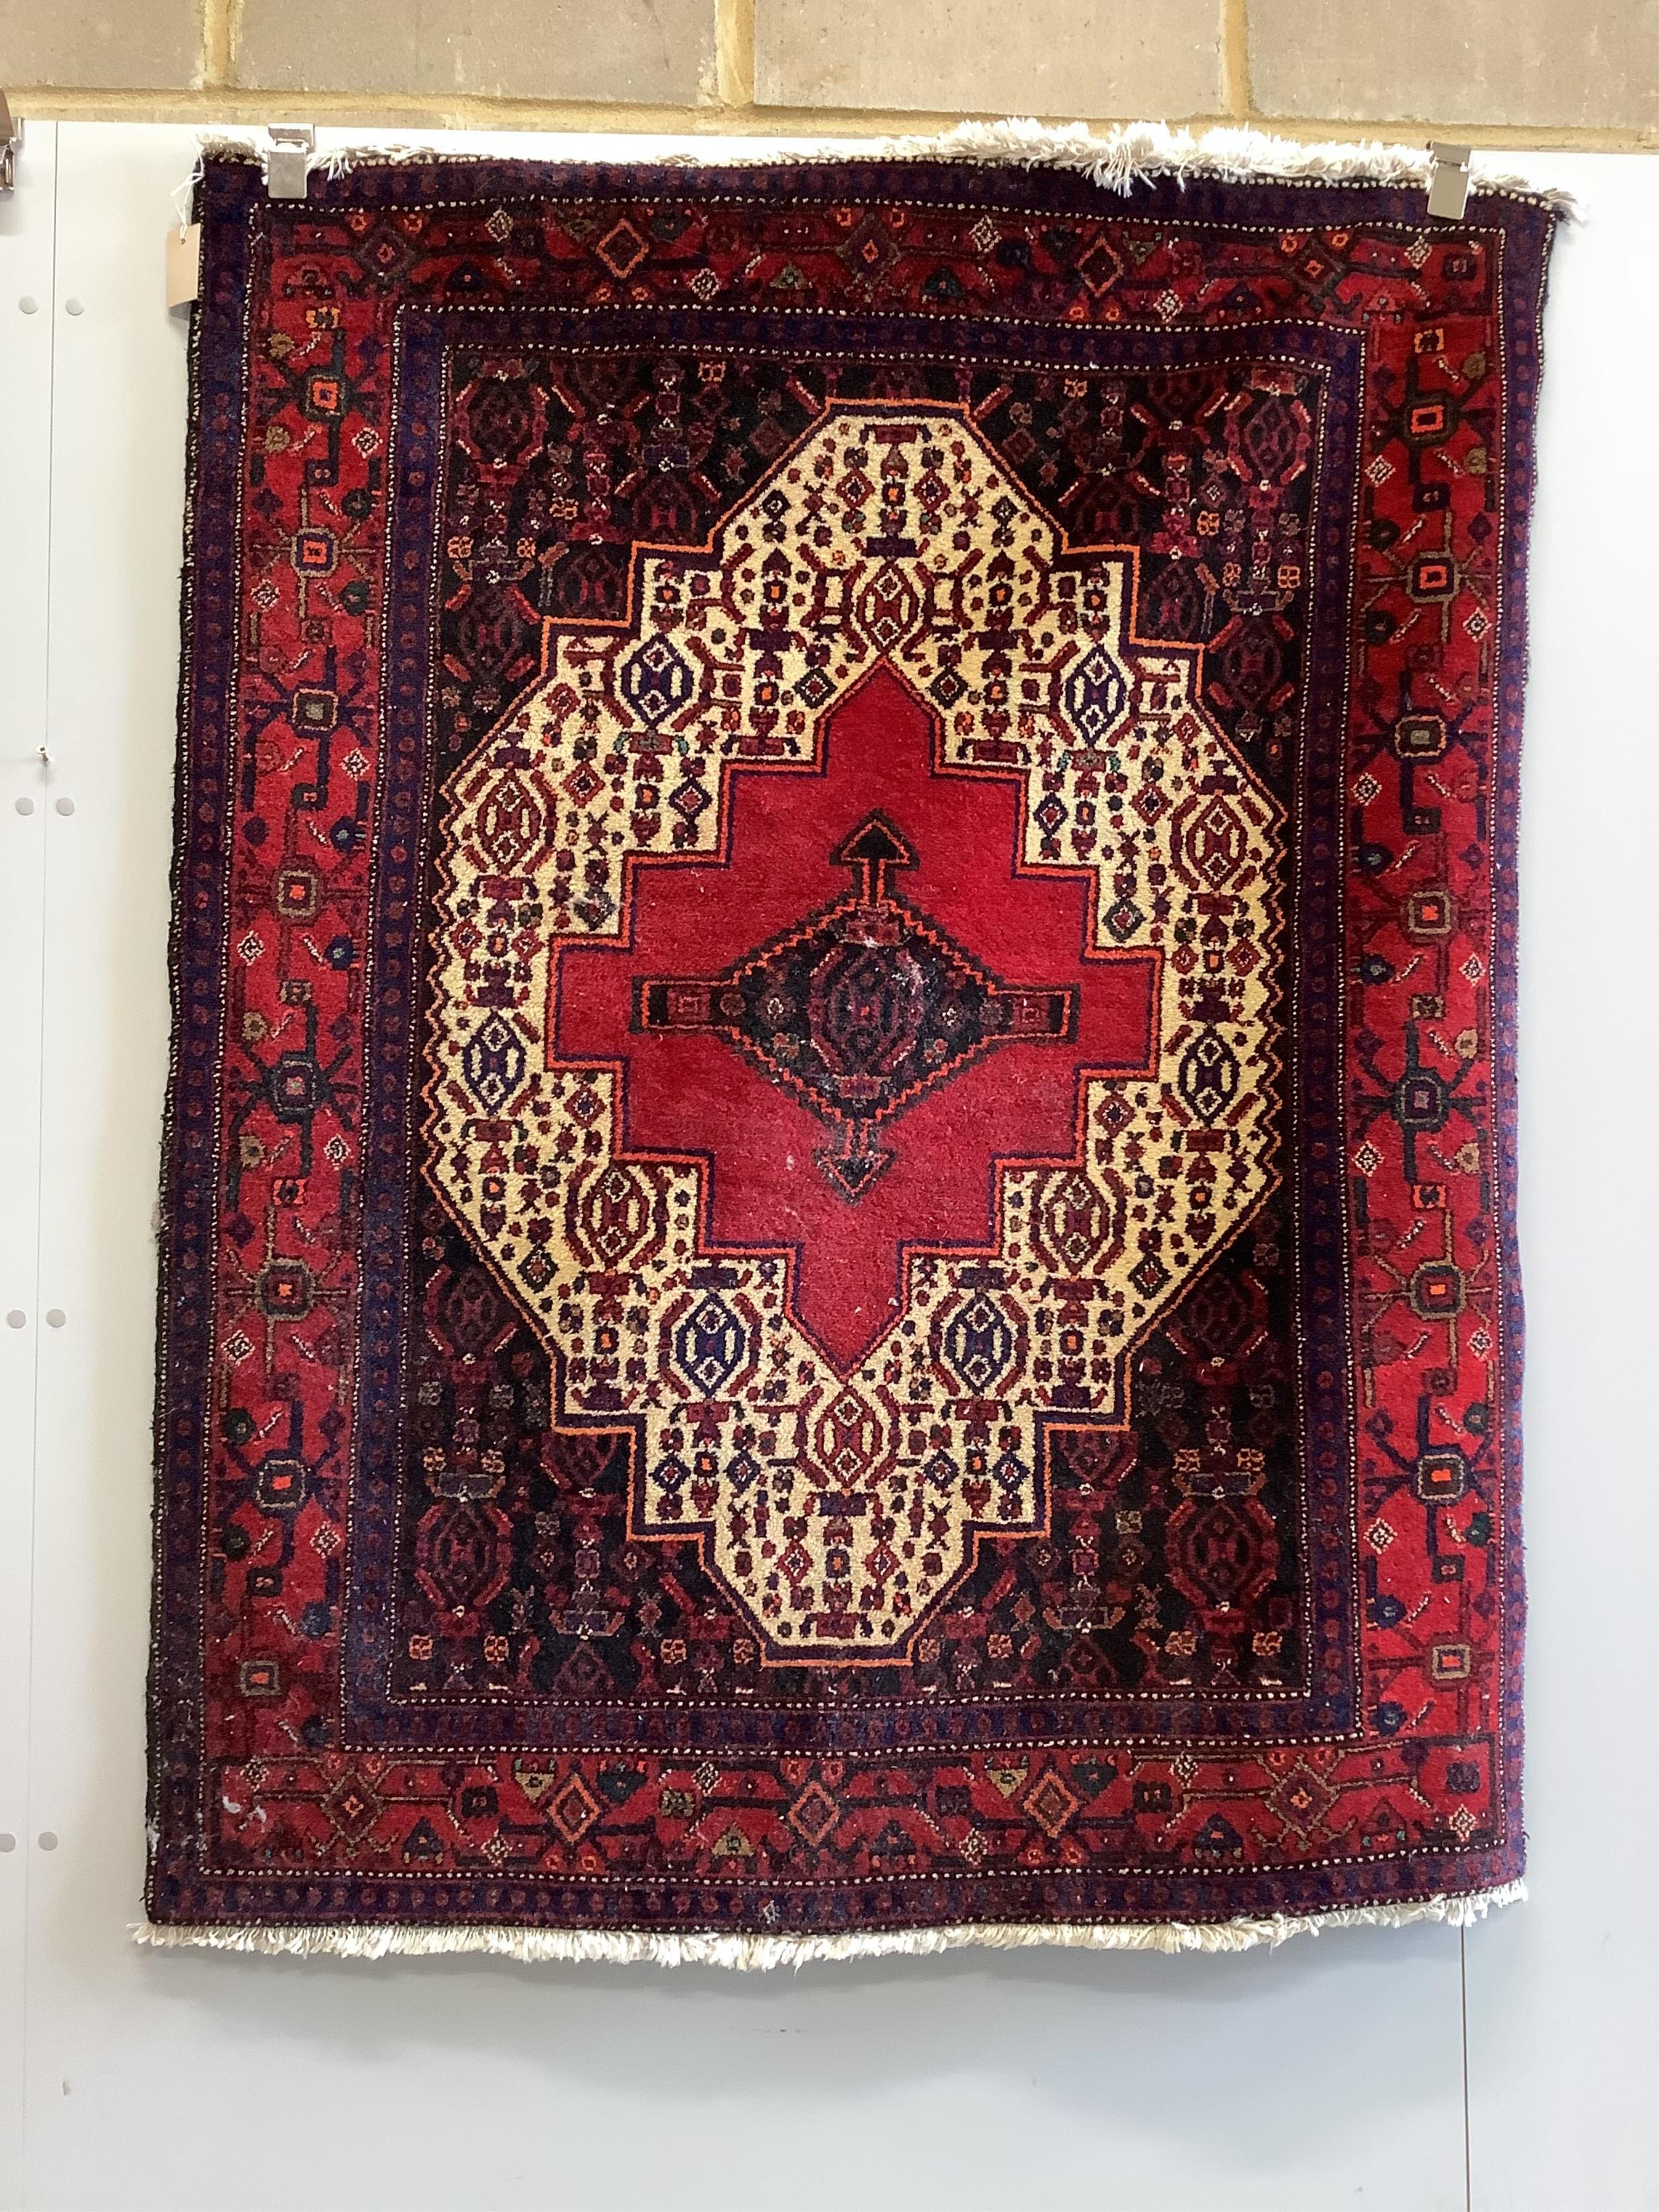 A Shiraz red ground rug, 150 x 120cm. Condition - fair